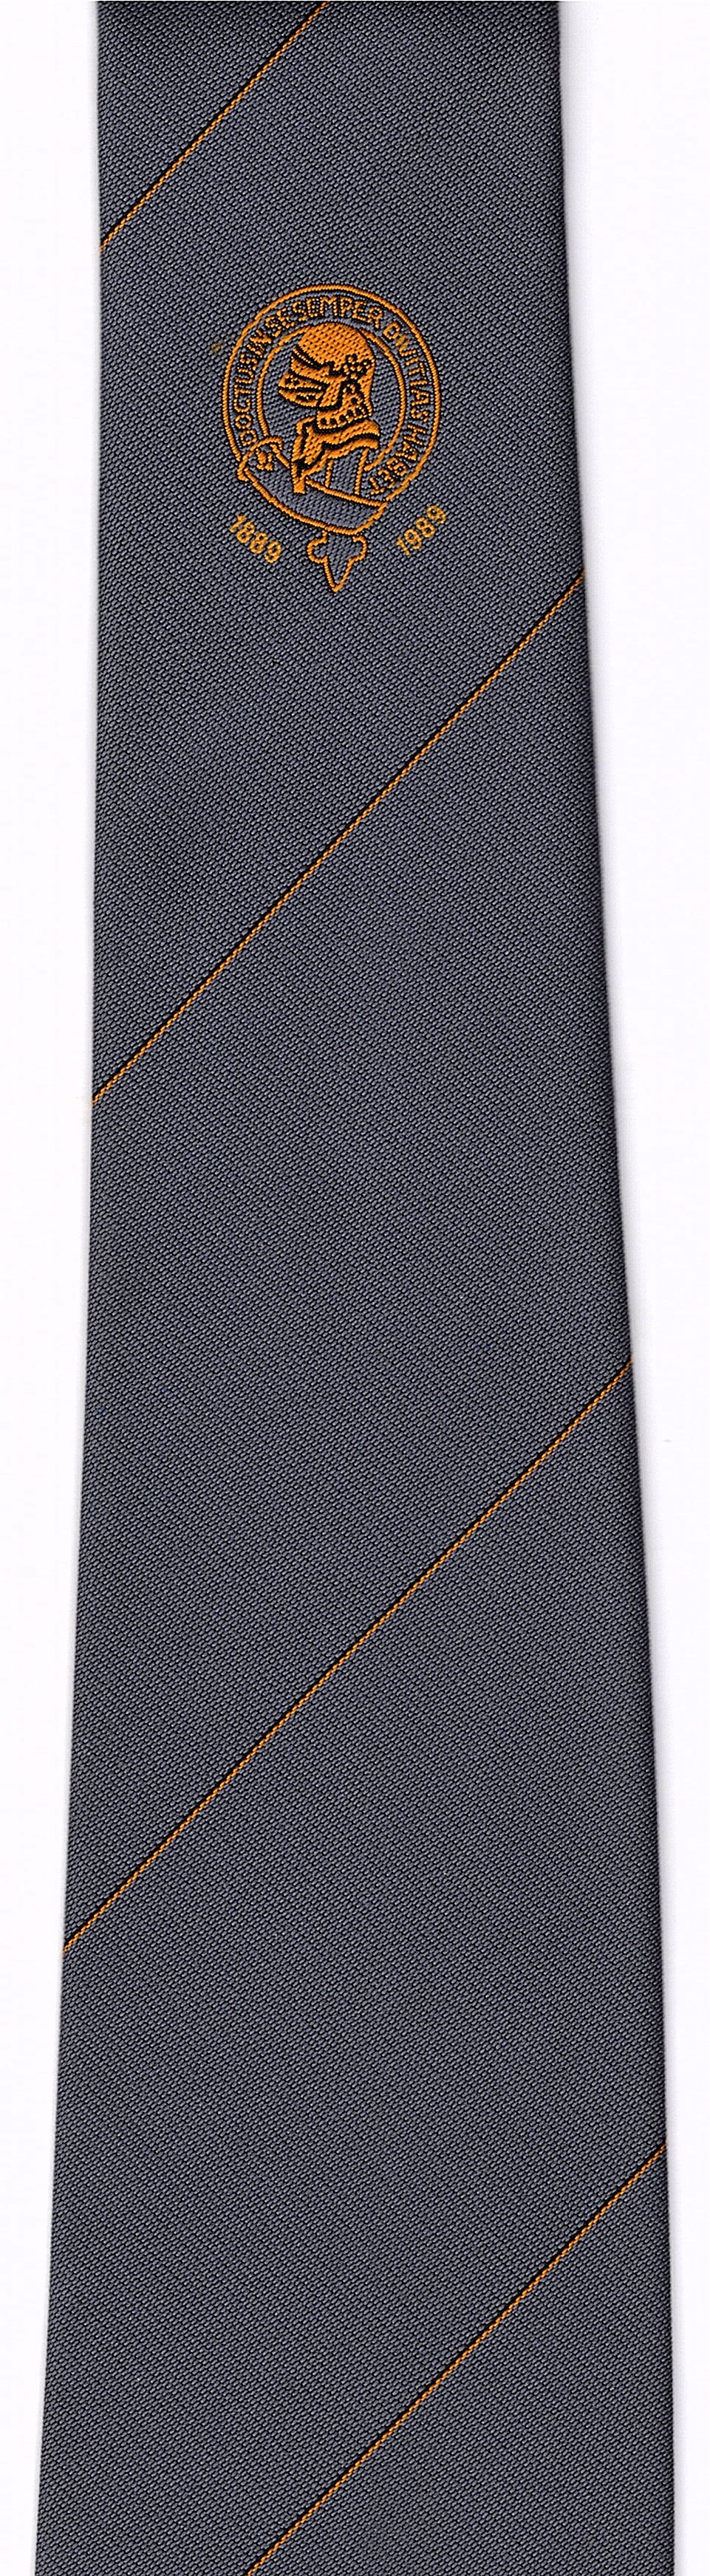 Photograph of BIOB Centenary Tie